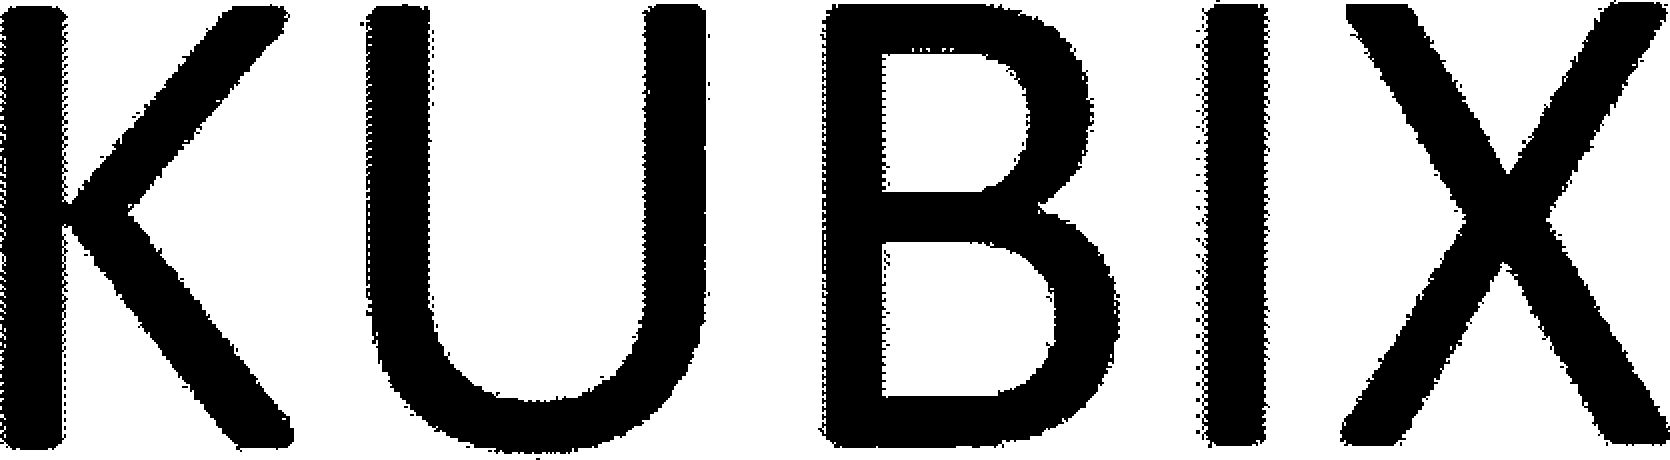 Trademark Logo KUBIX